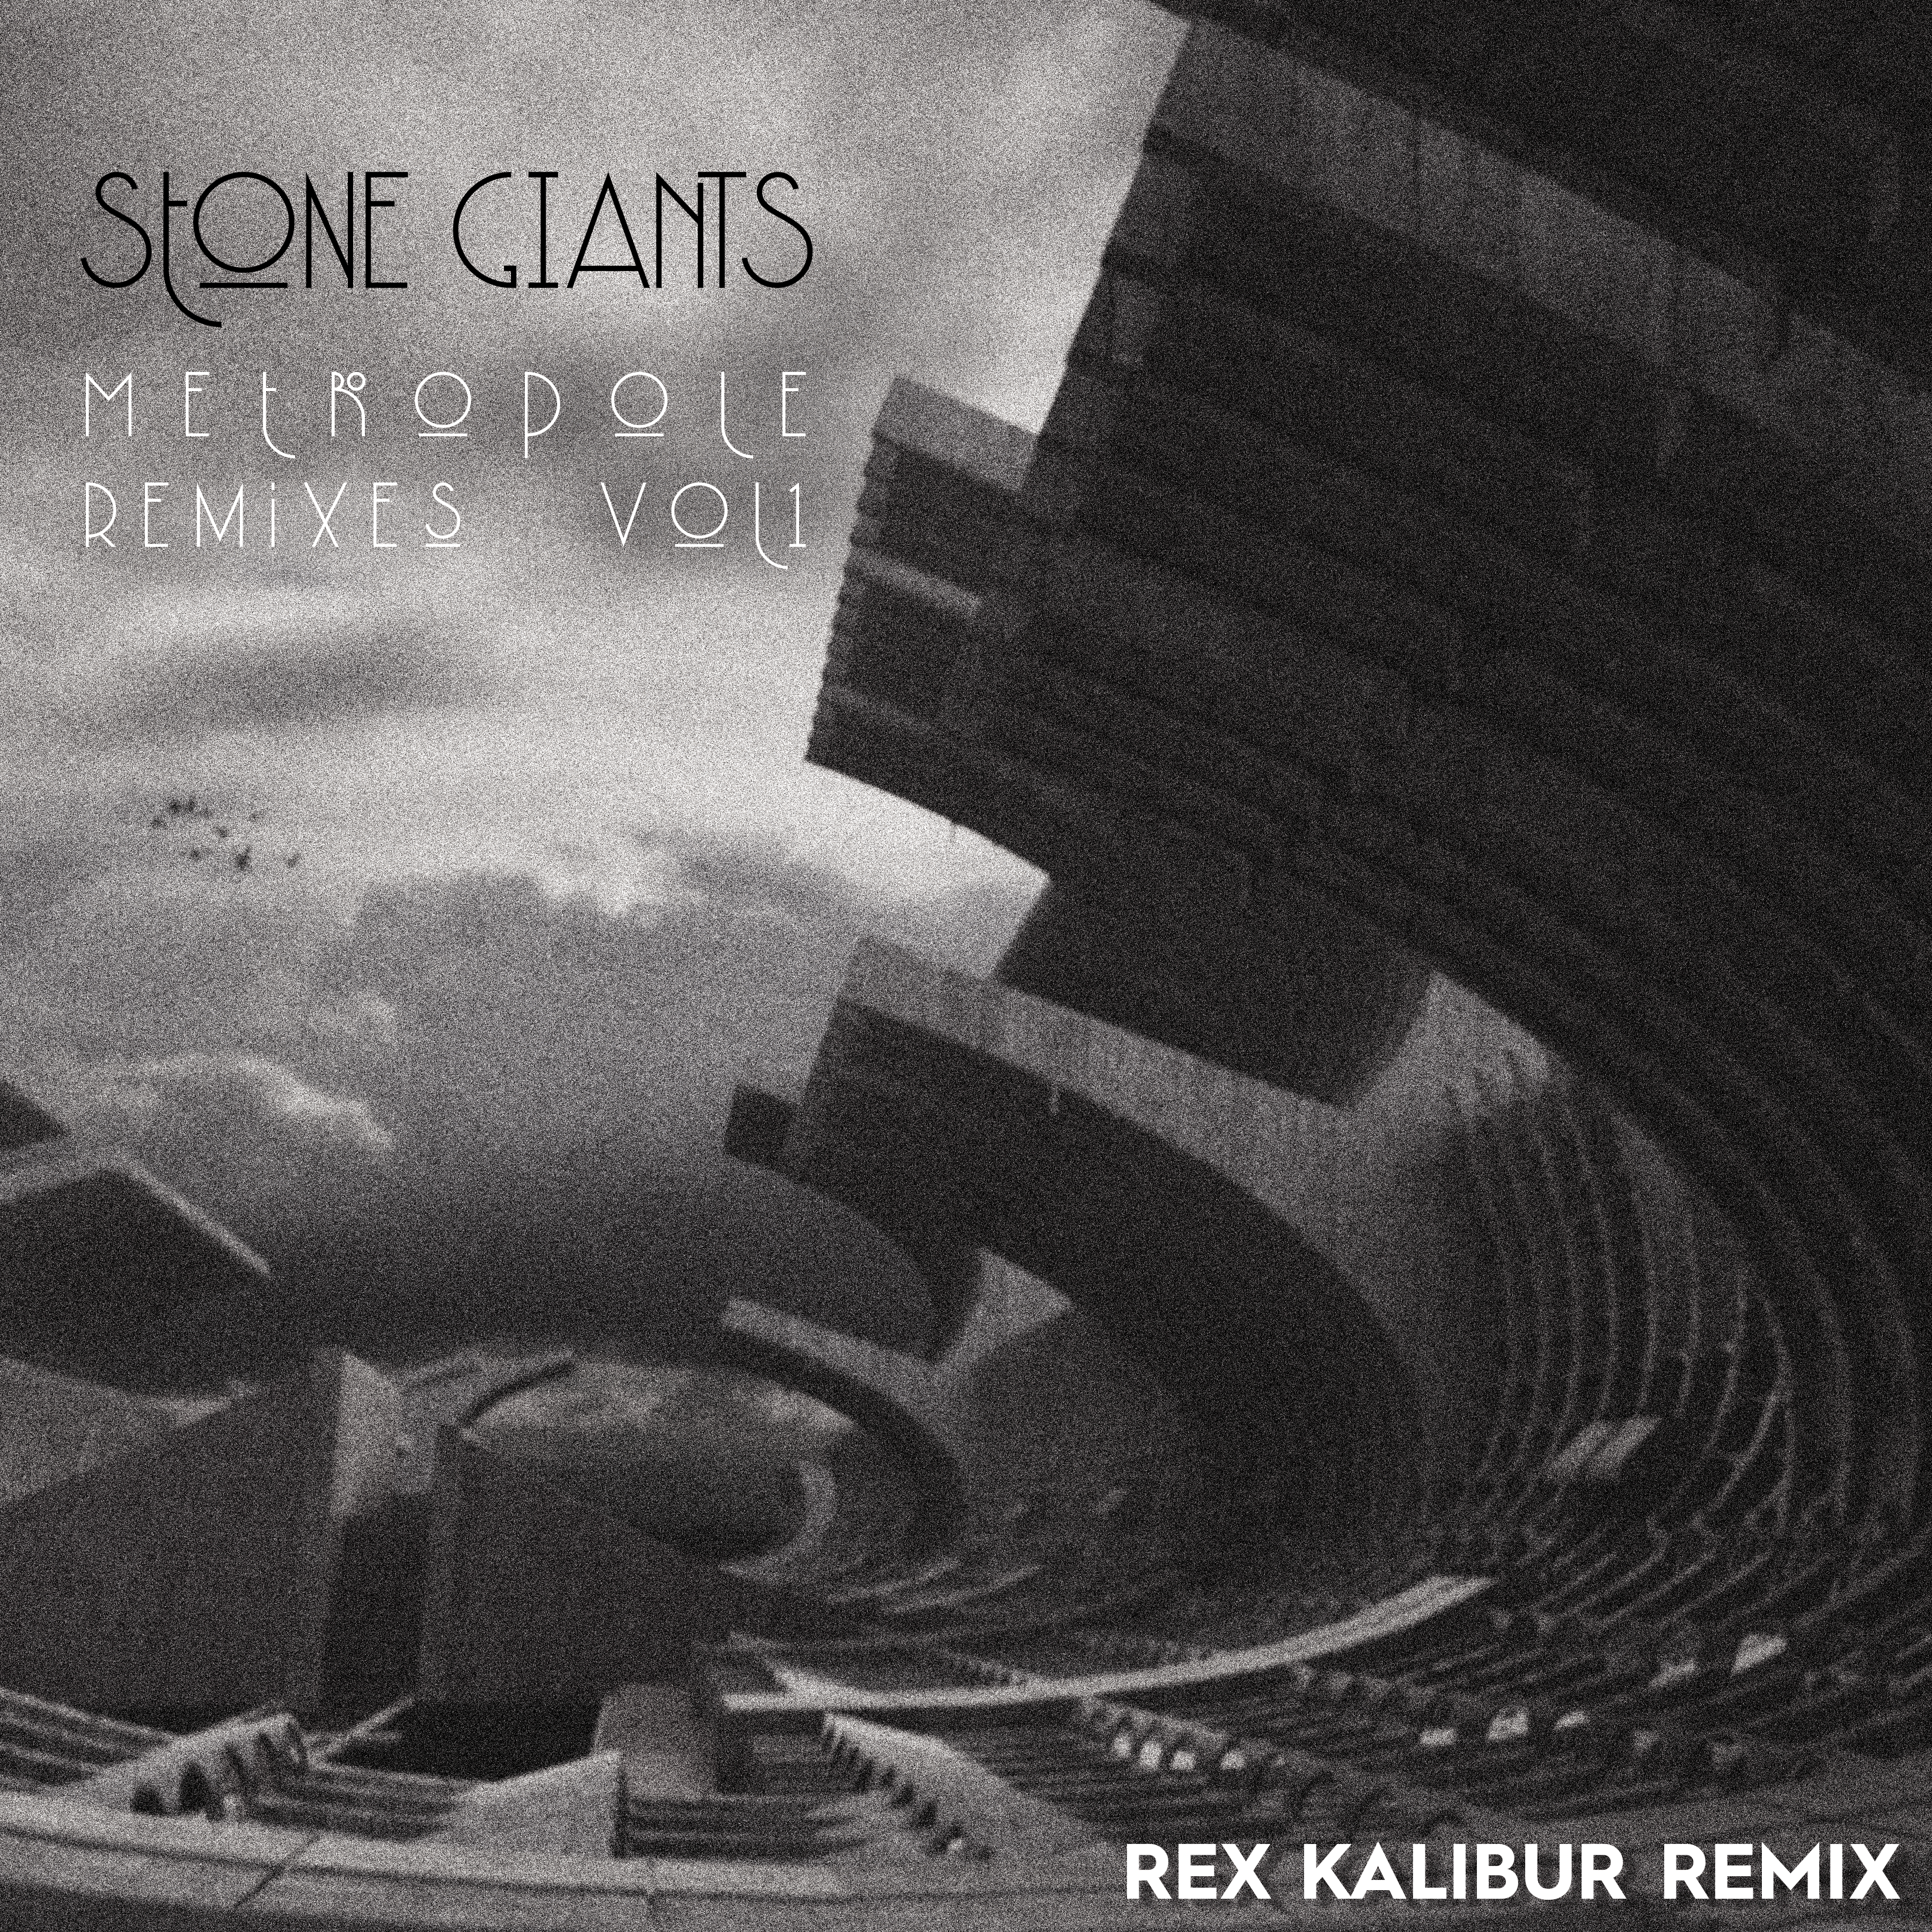 Cover art for Amon Tobin's song: stone giants: metropole (rex kalibur remix)